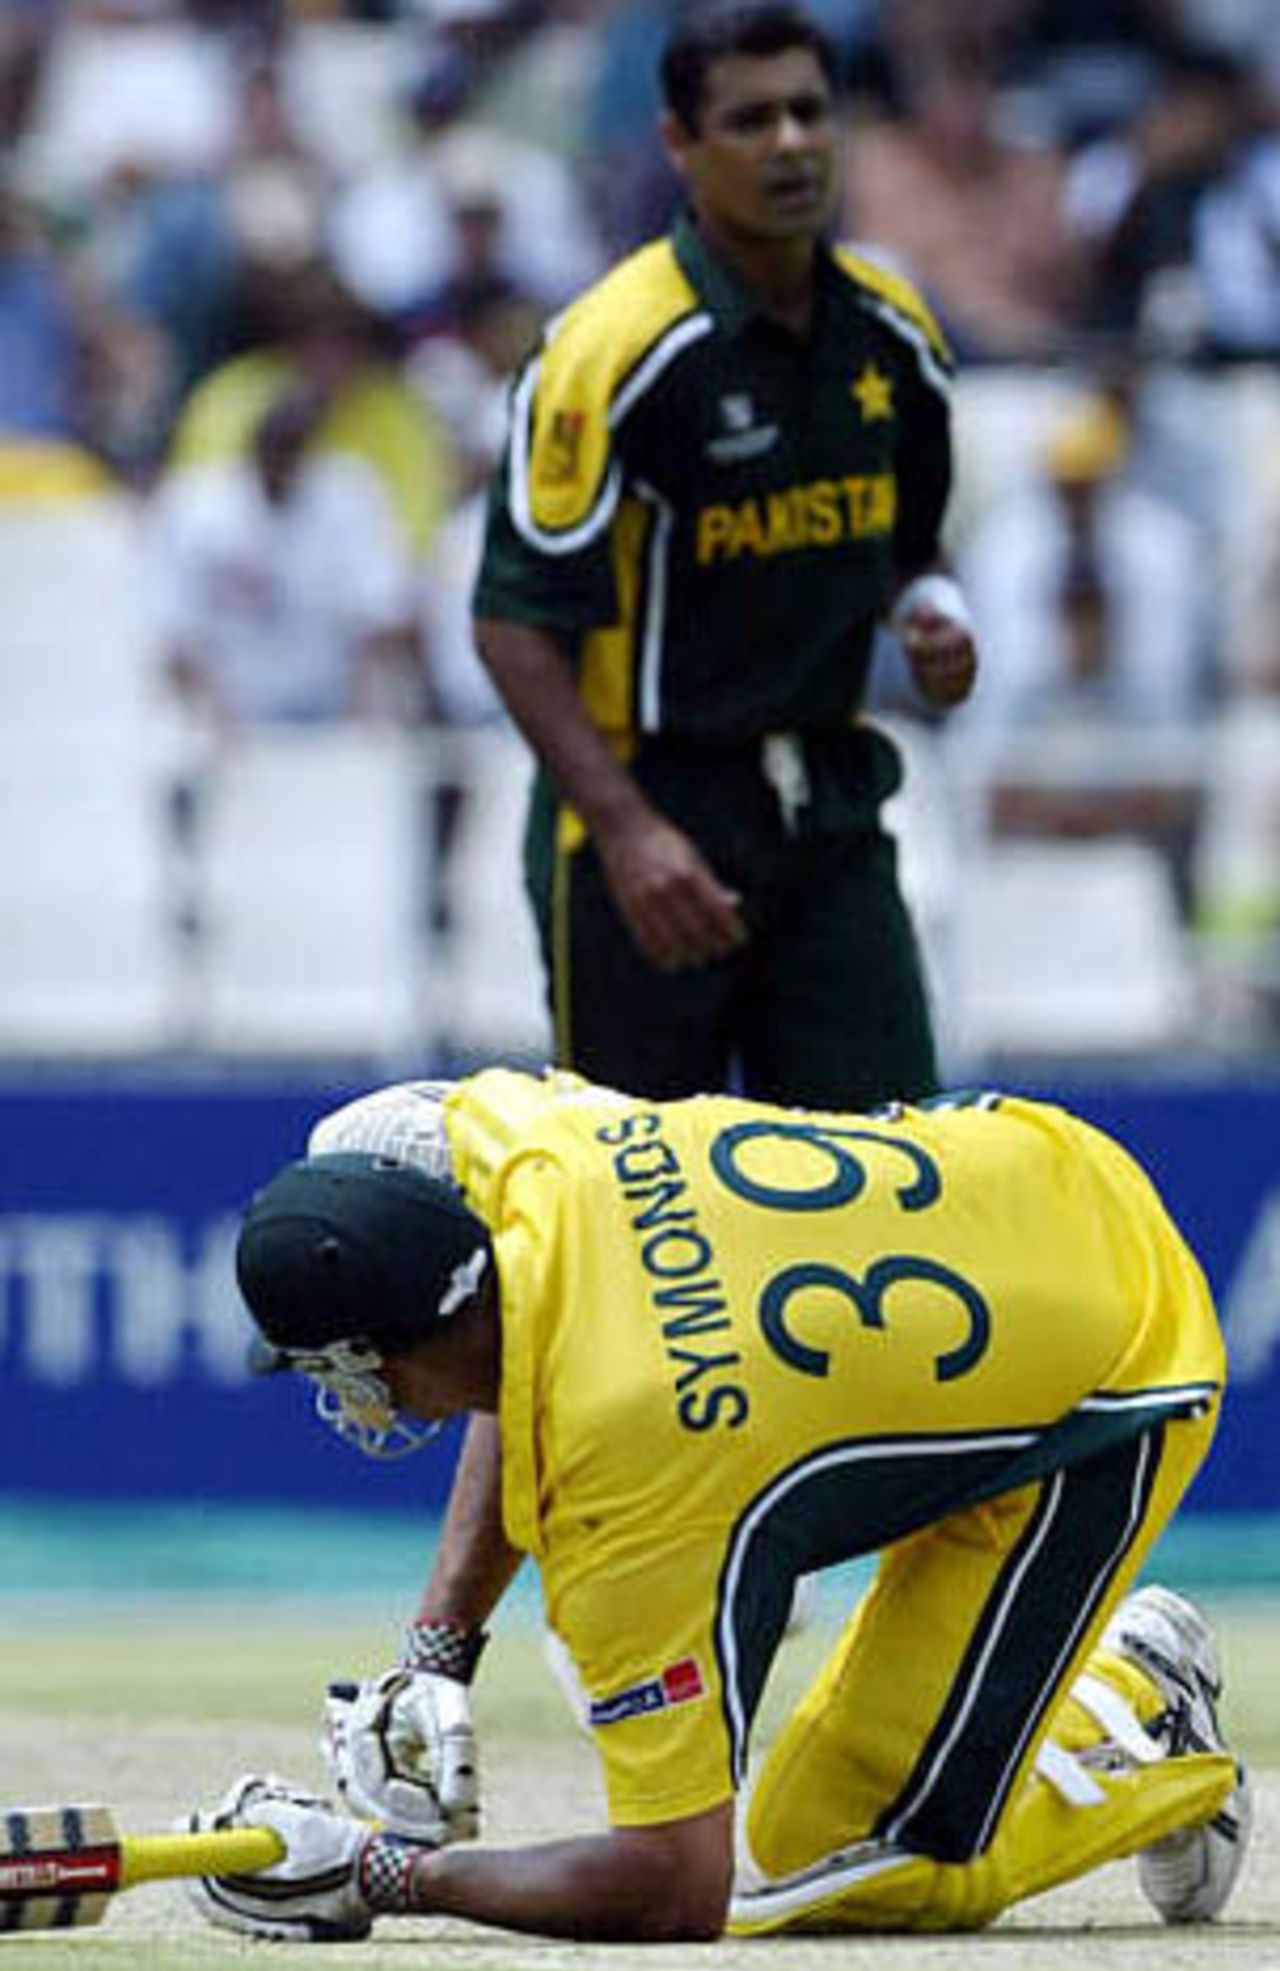 World Cup, 2003 - Australia v Pakistan at Johannesburg, 11 Feb 2003